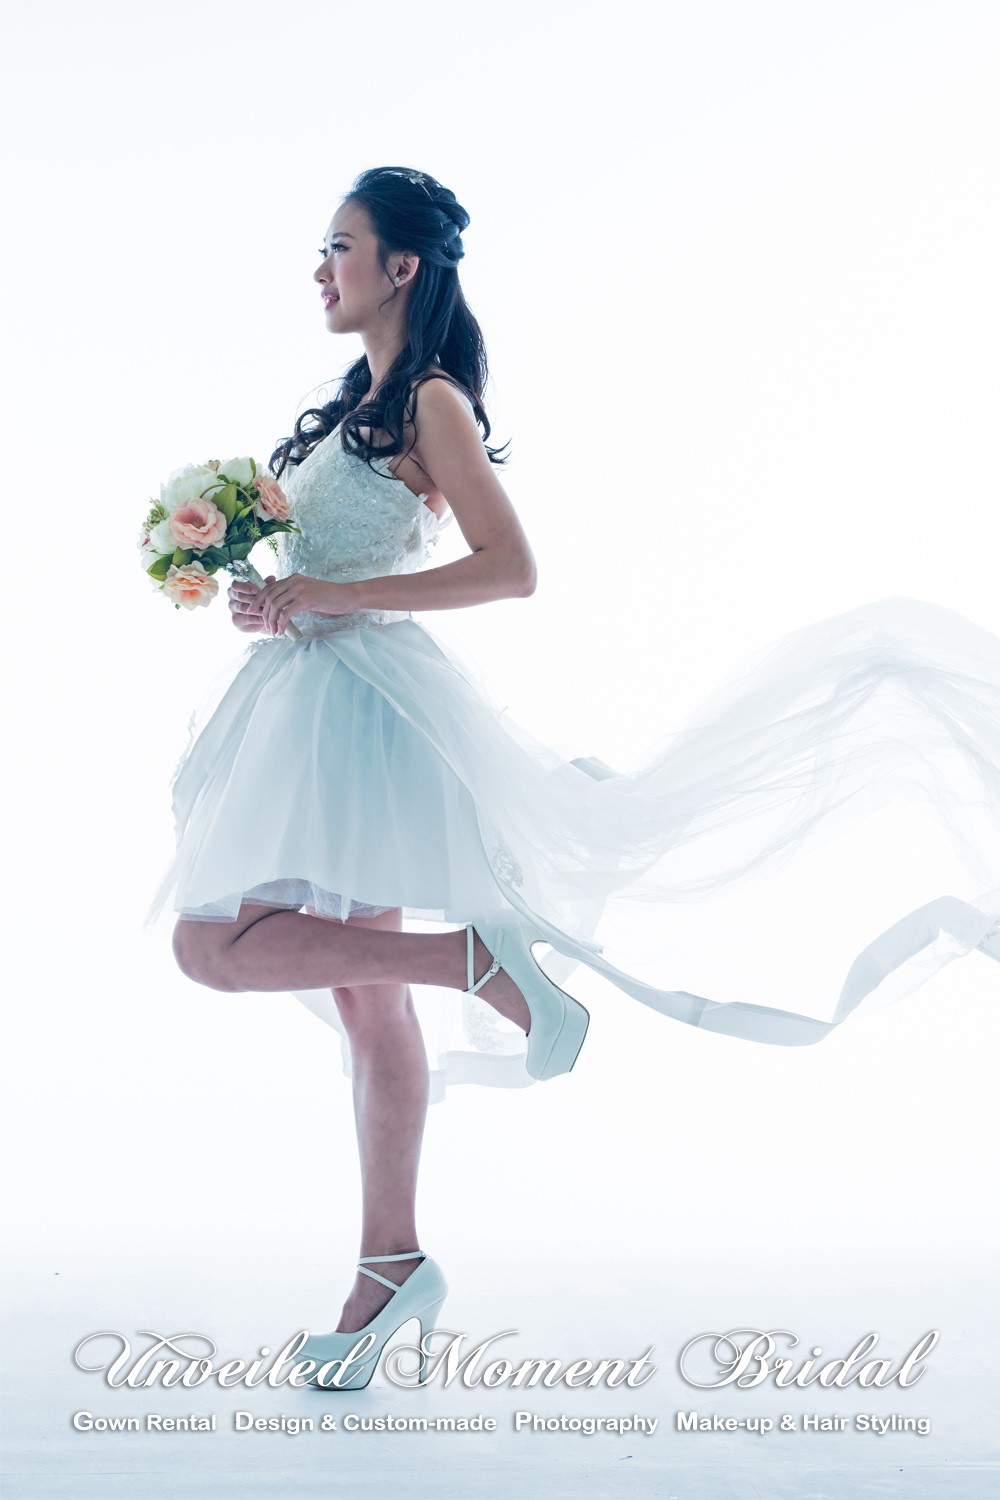 Bride wering strapless, V-sharp neckline, lace embellishment, Short Bridal Dress with panel train 新娘穿上無肩帶, V領, 蕾絲釘珠, 輕紗拖尾, 前短後長輕婚紗